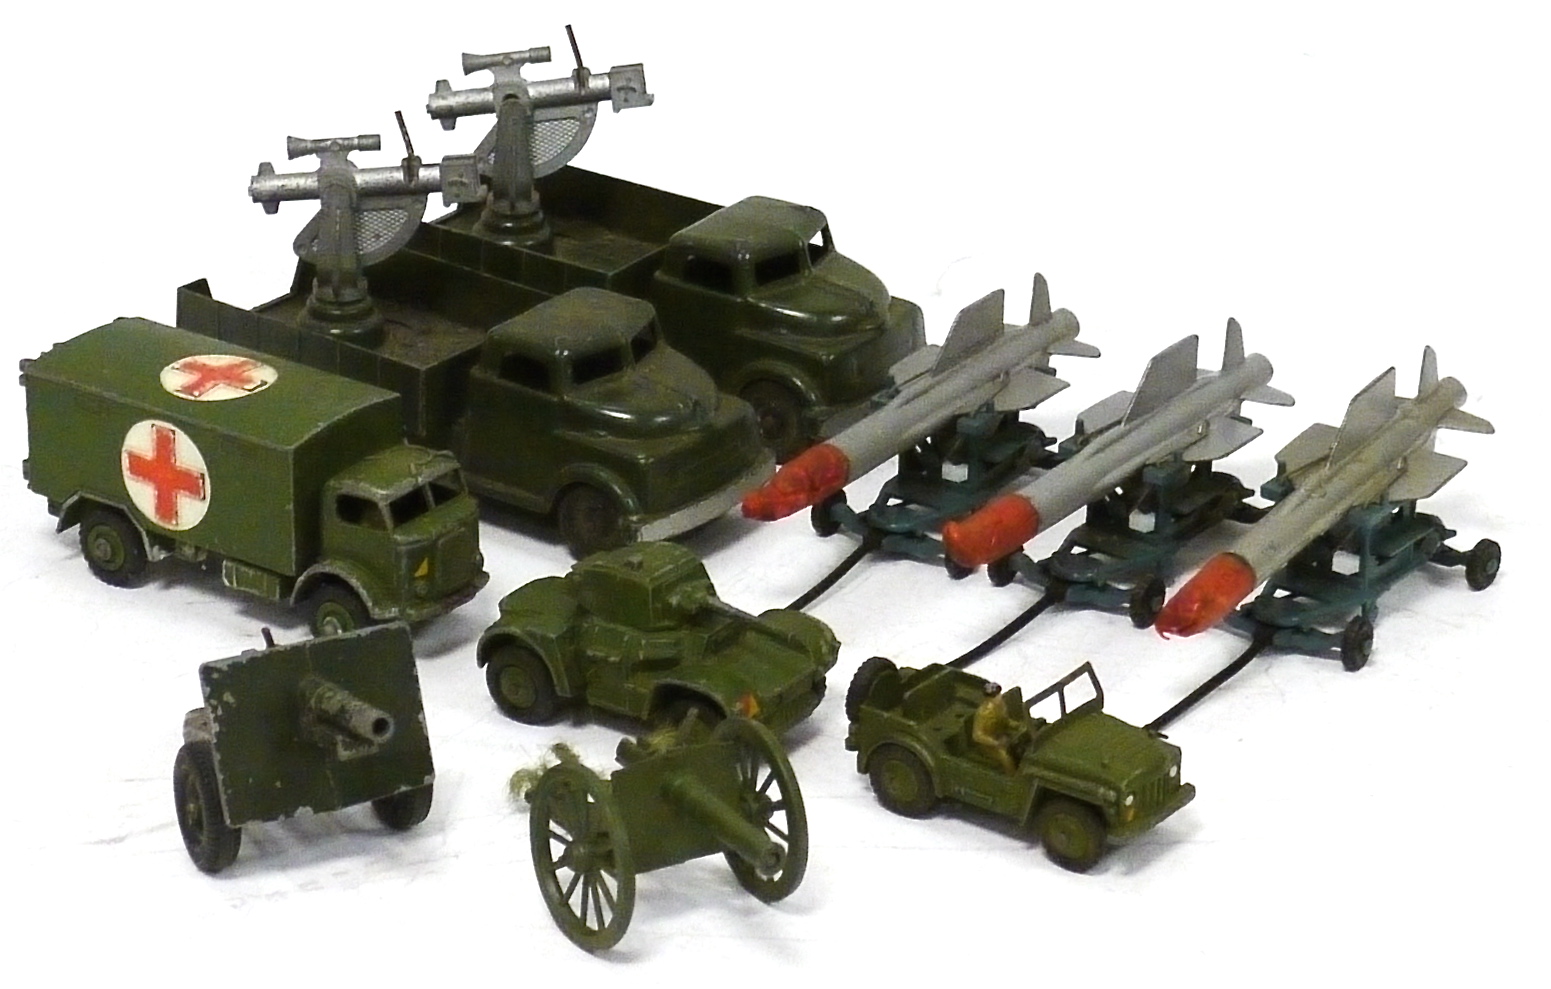 Lone Star Corgi & Dinky Military Vehicles, including a Lone Star Lorry (2),Dinky 626 Military